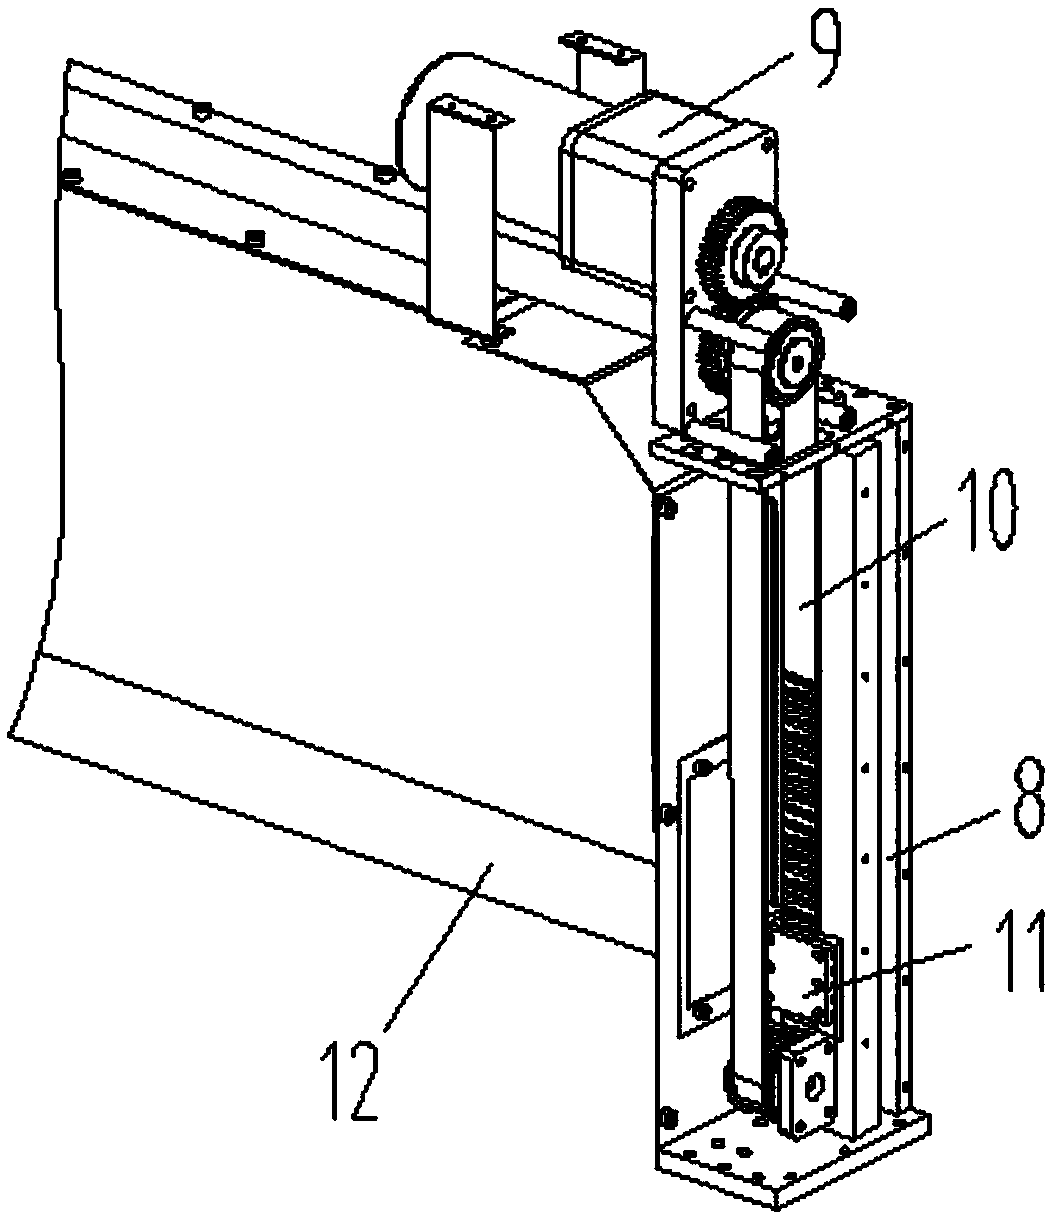 A fully automatic cloth cutting machine